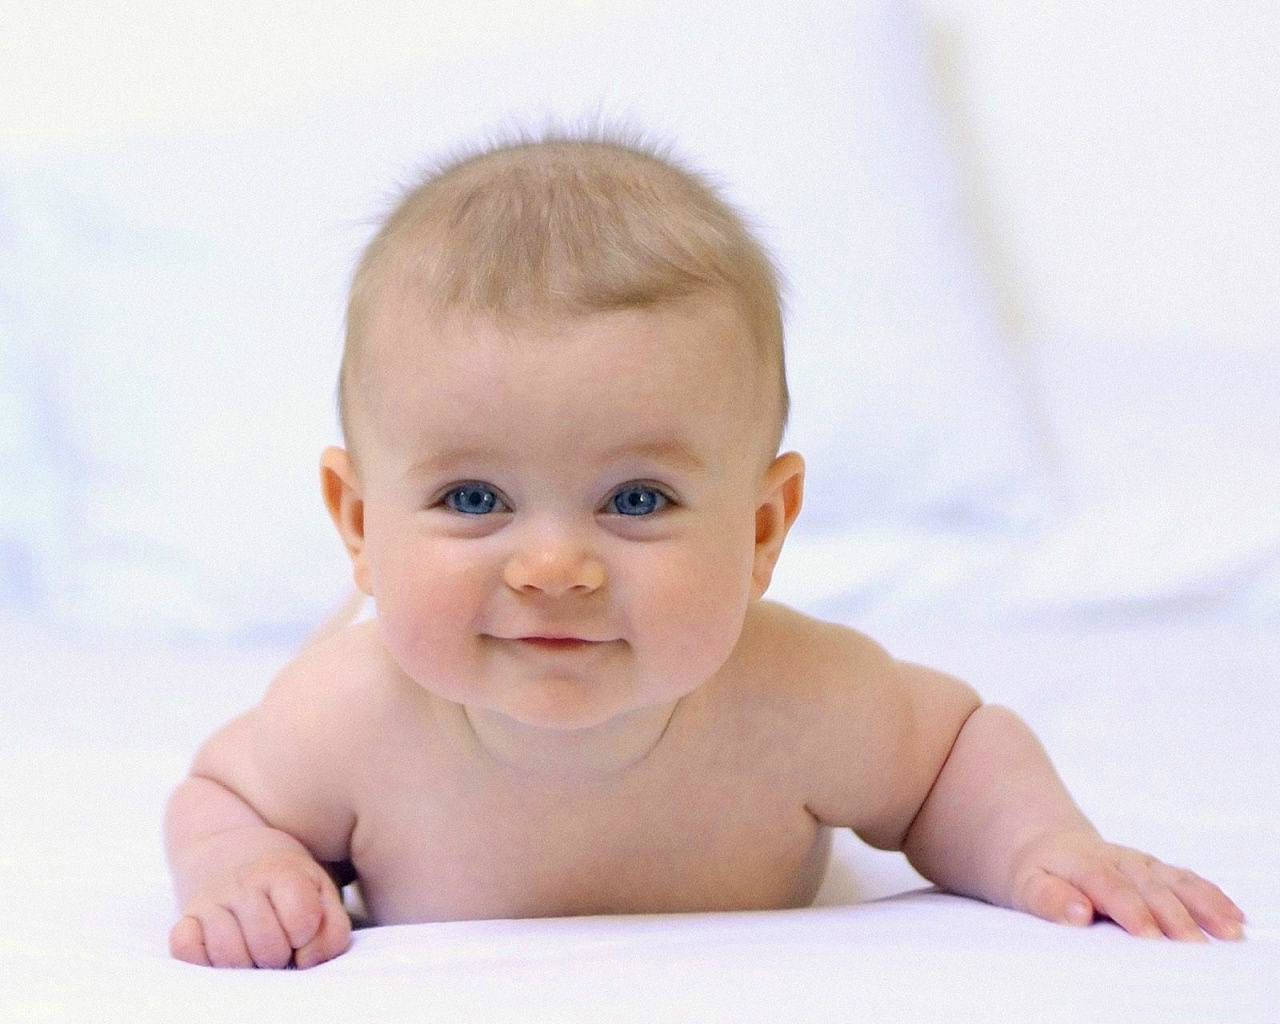 A Smiling Newborn Baby